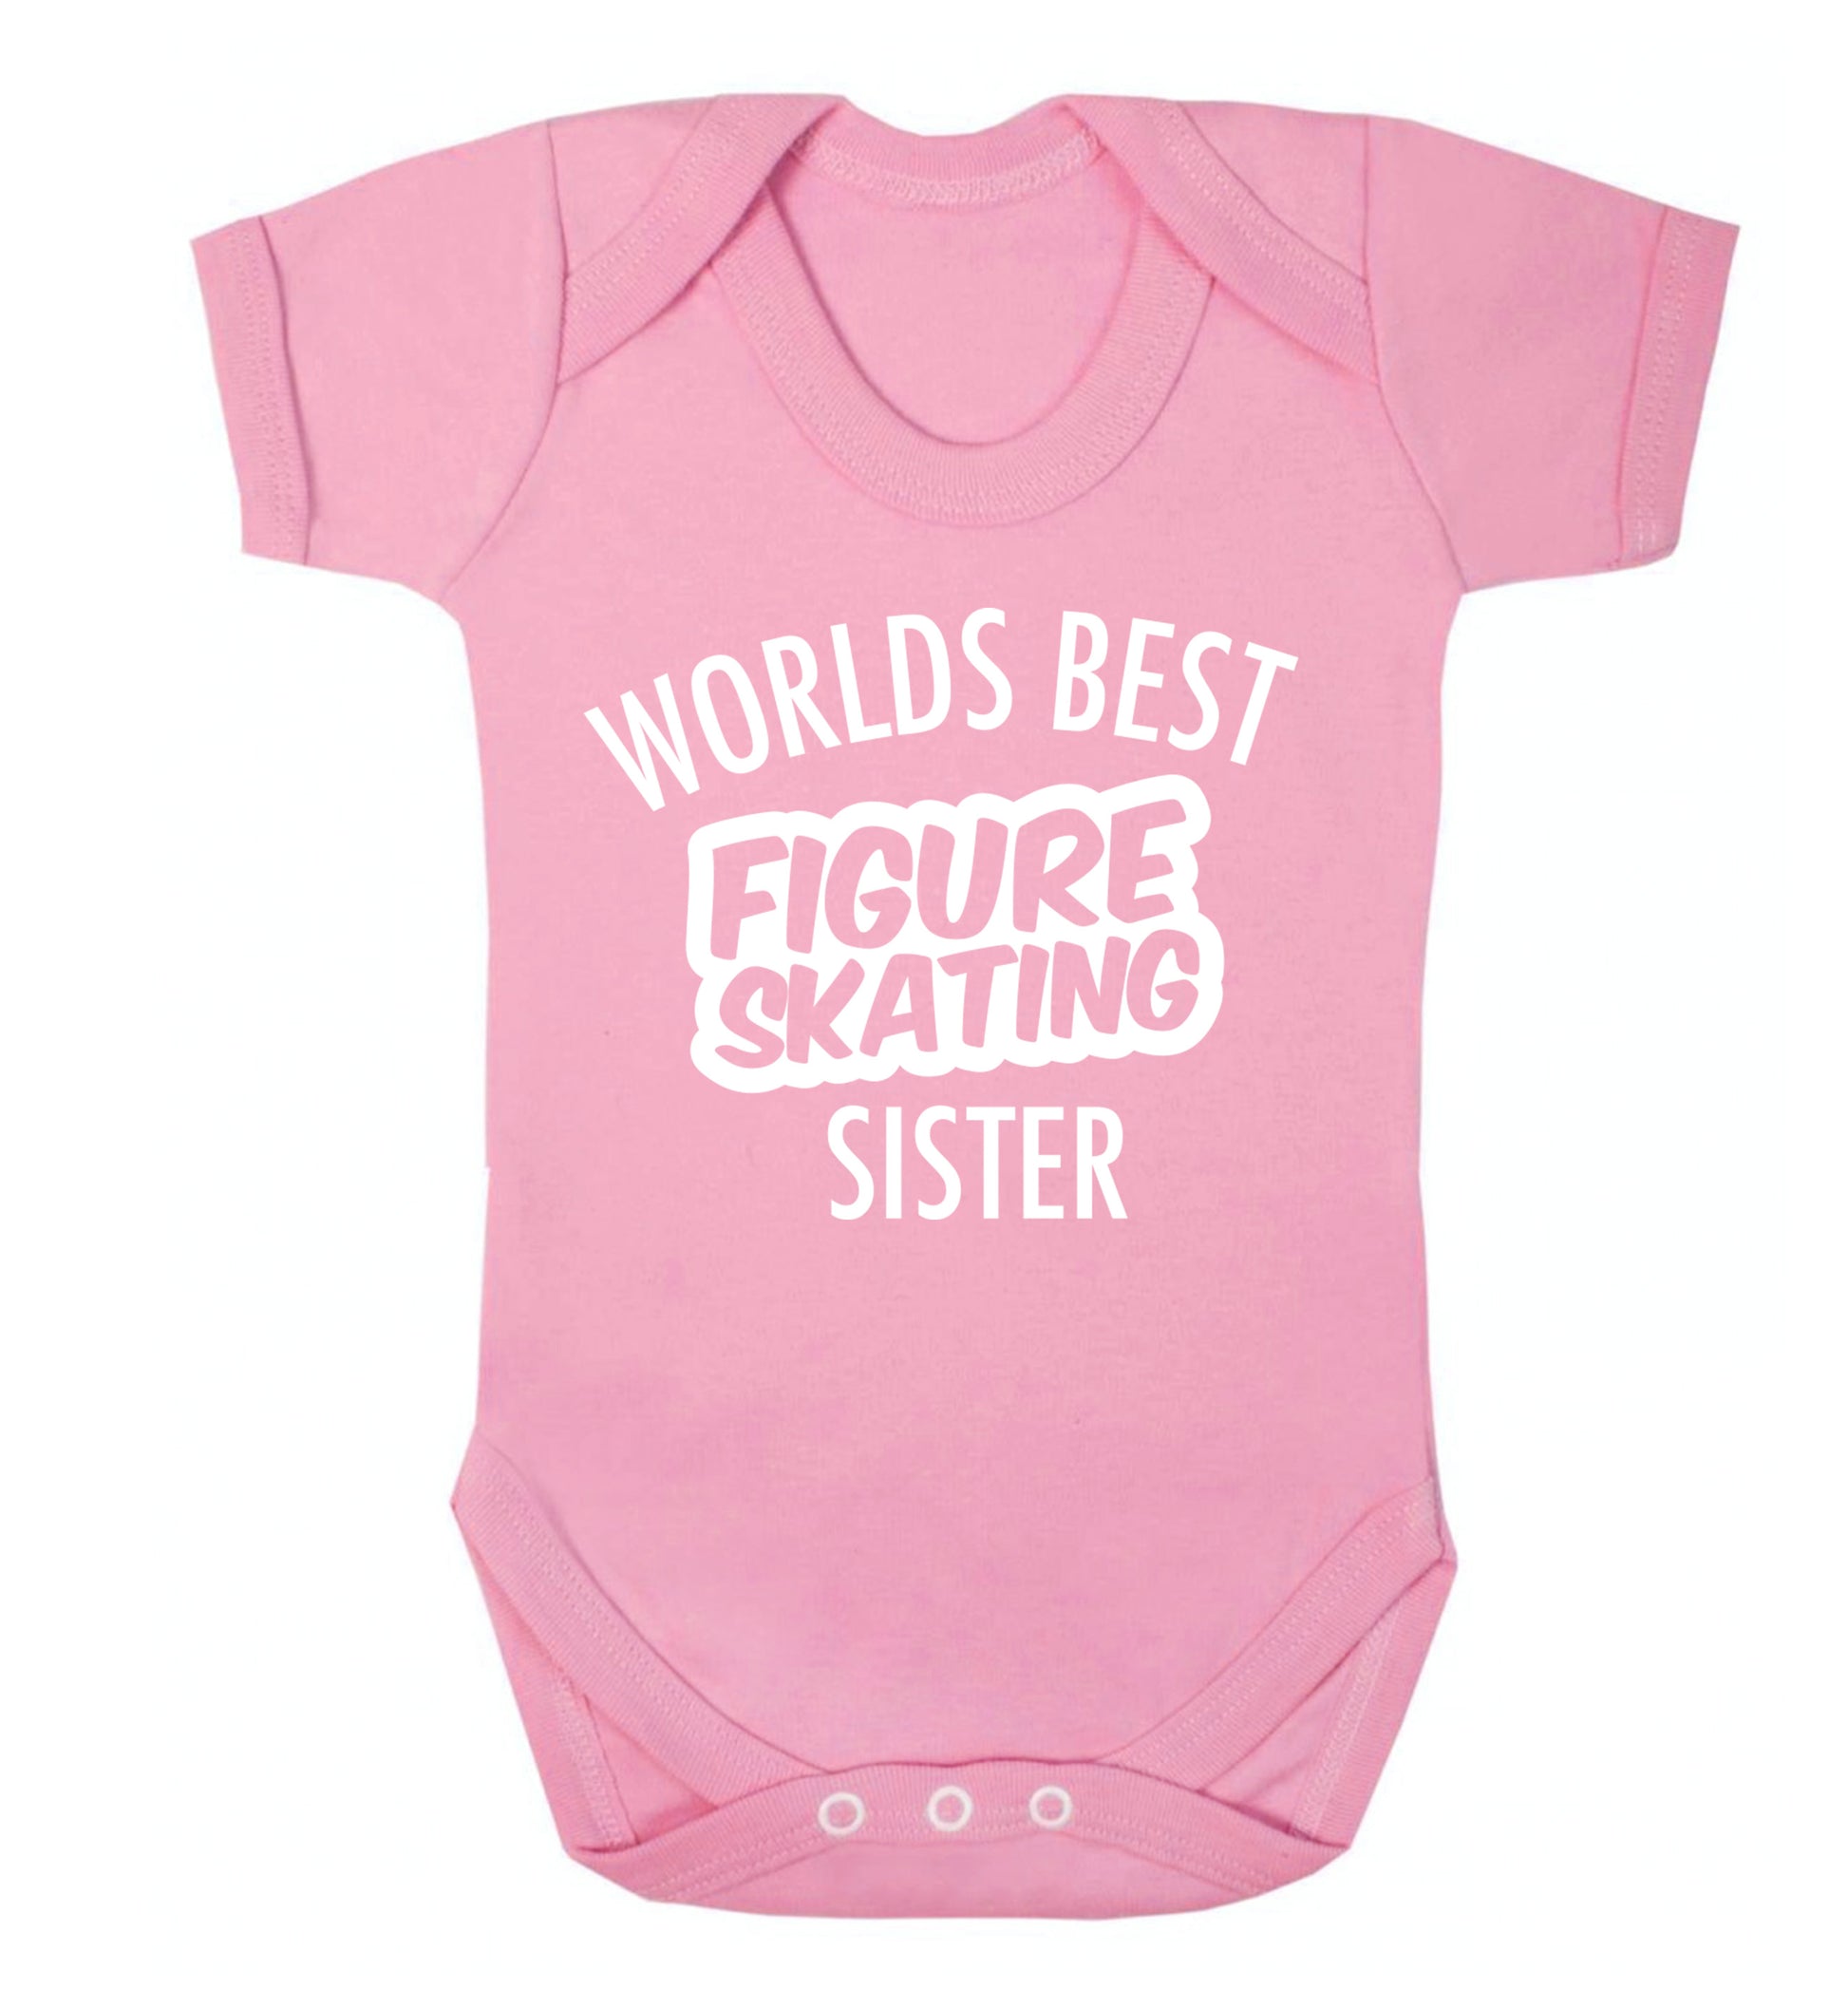 Worlds best figure skating sisterBaby Vest pale pink 18-24 months